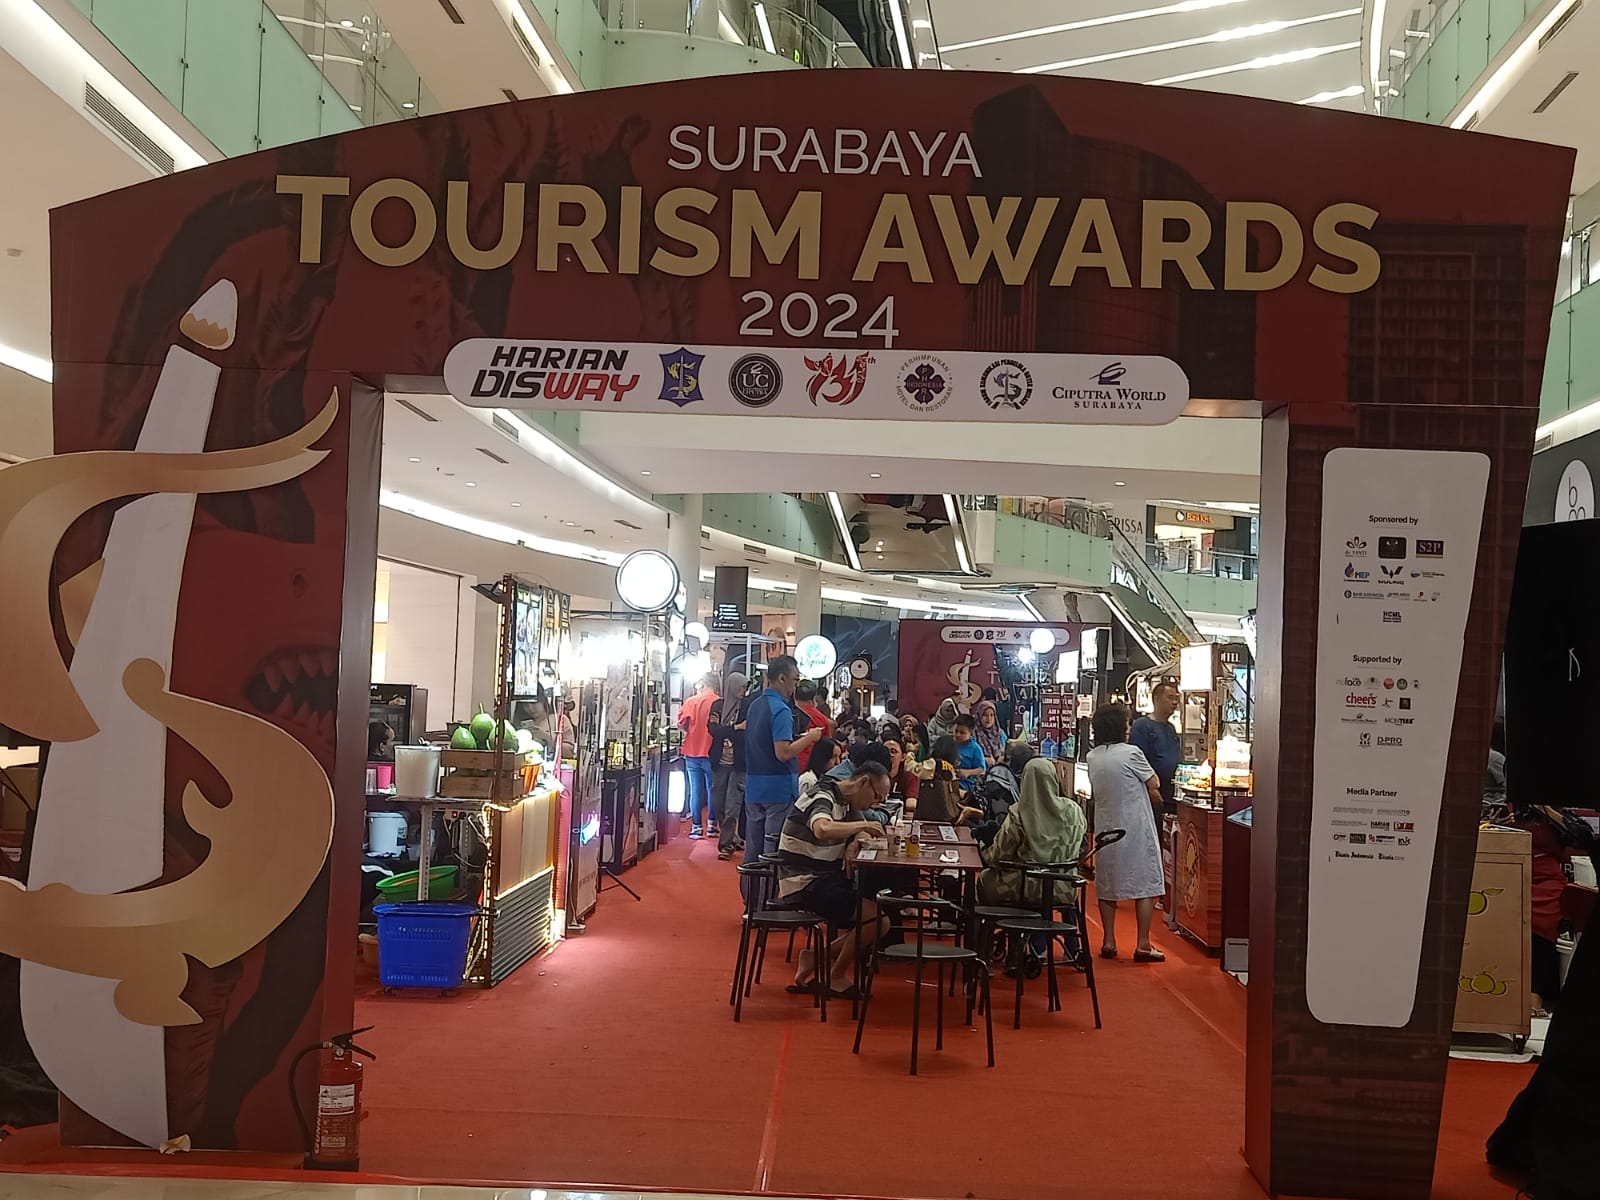 Surabaya Tourism Award Kembali Digelar, Promosikan Potensi Wisata kepada Masyarakat